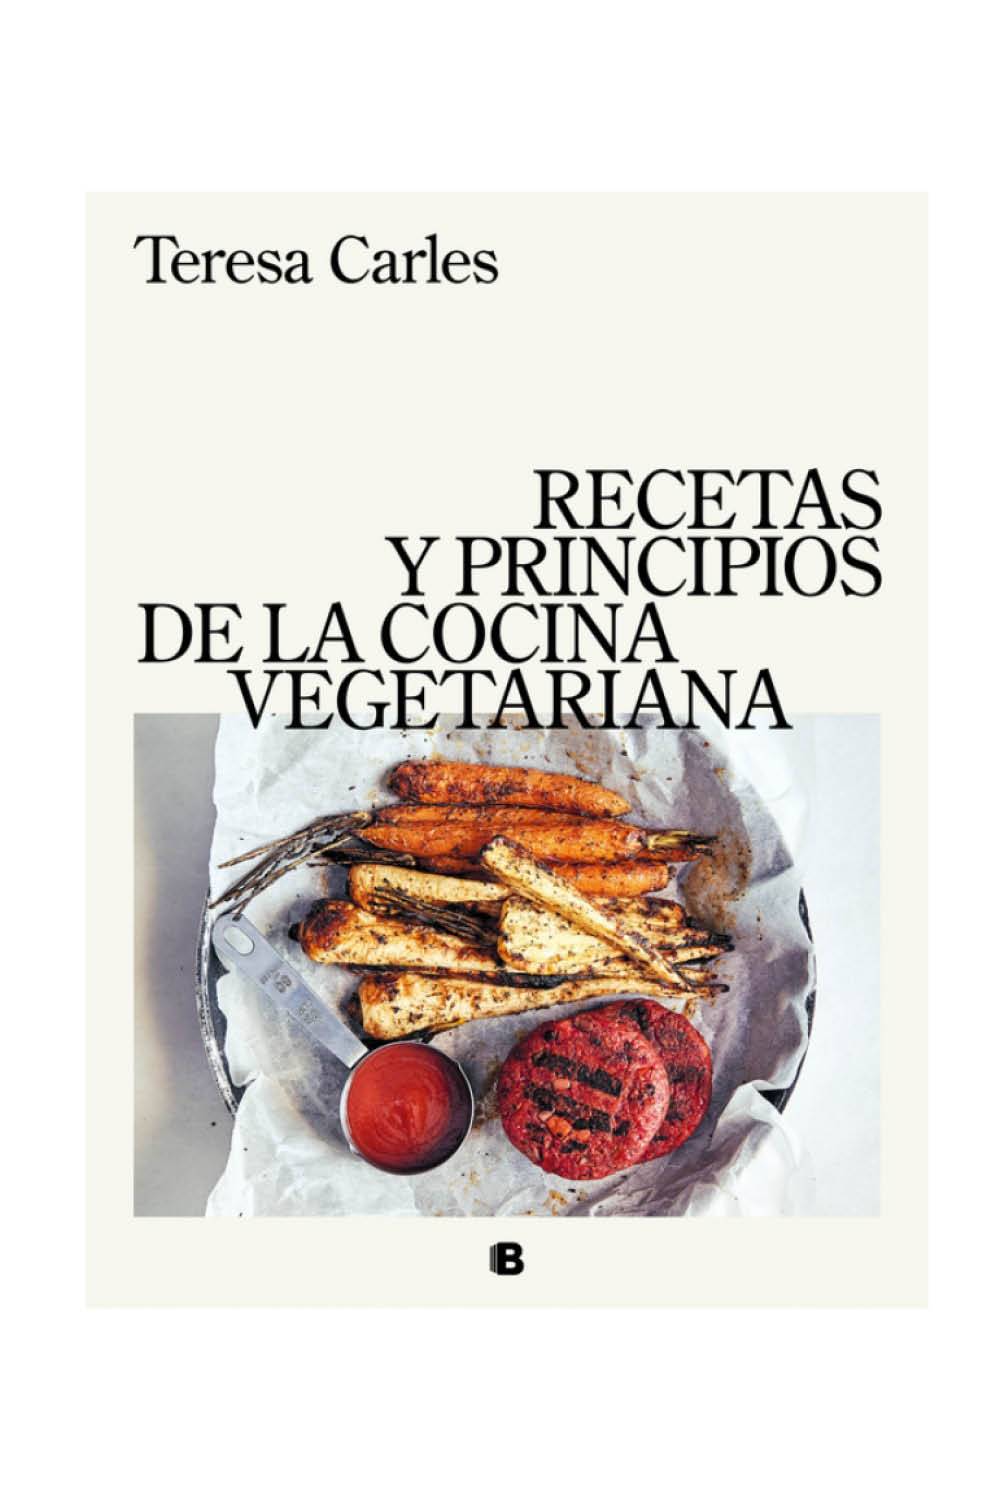 libros recomendados de recetas vegetarianas teresa carles flex kale